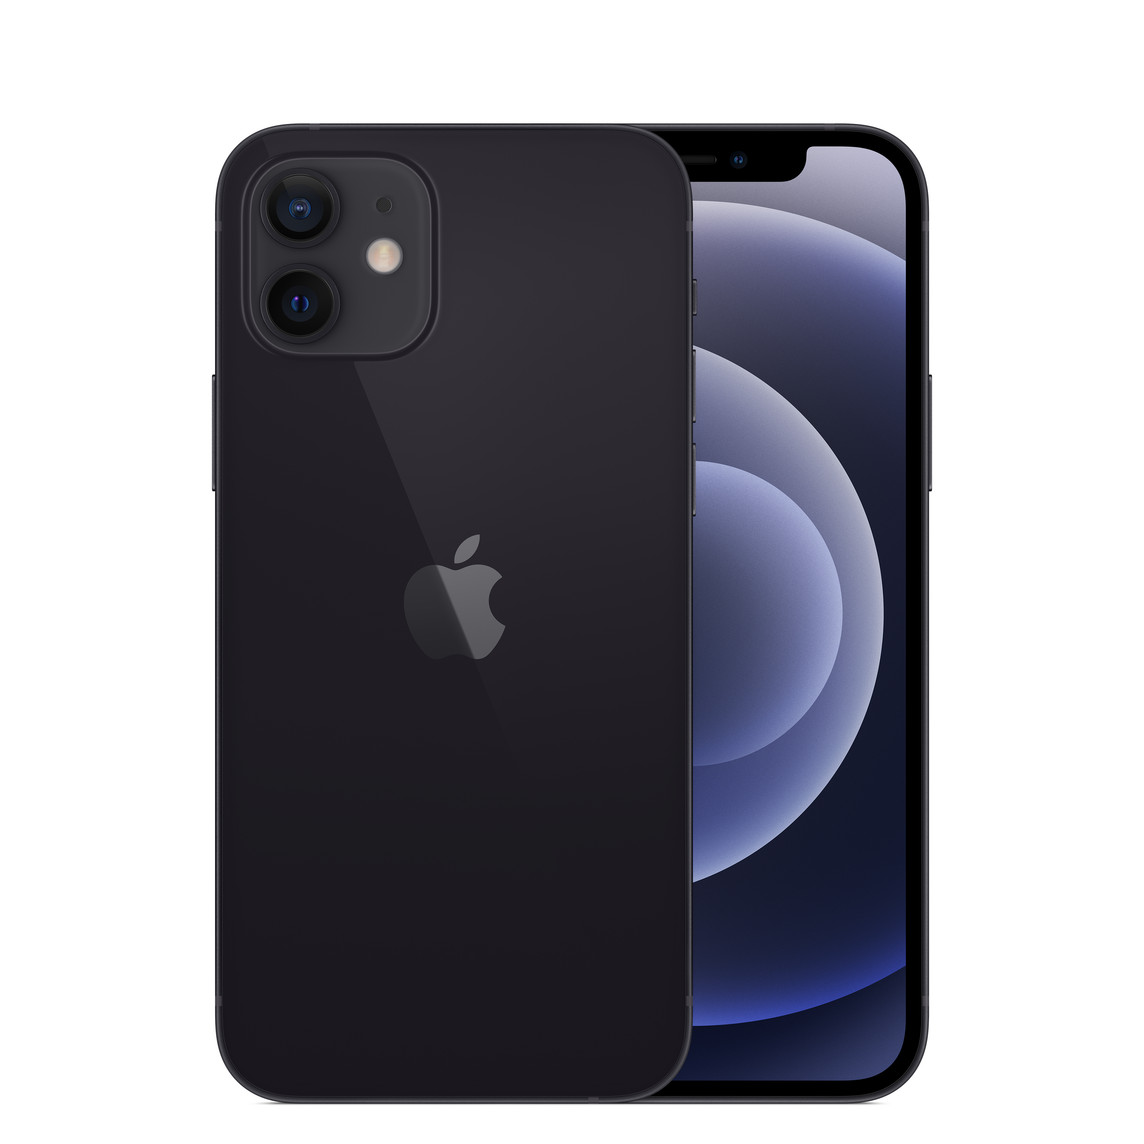 Zwarte iPhone 12, dual camera-systeem met True Tone Flash, microfoon, Apple logo in het midden, voorkant, all-screendisplay